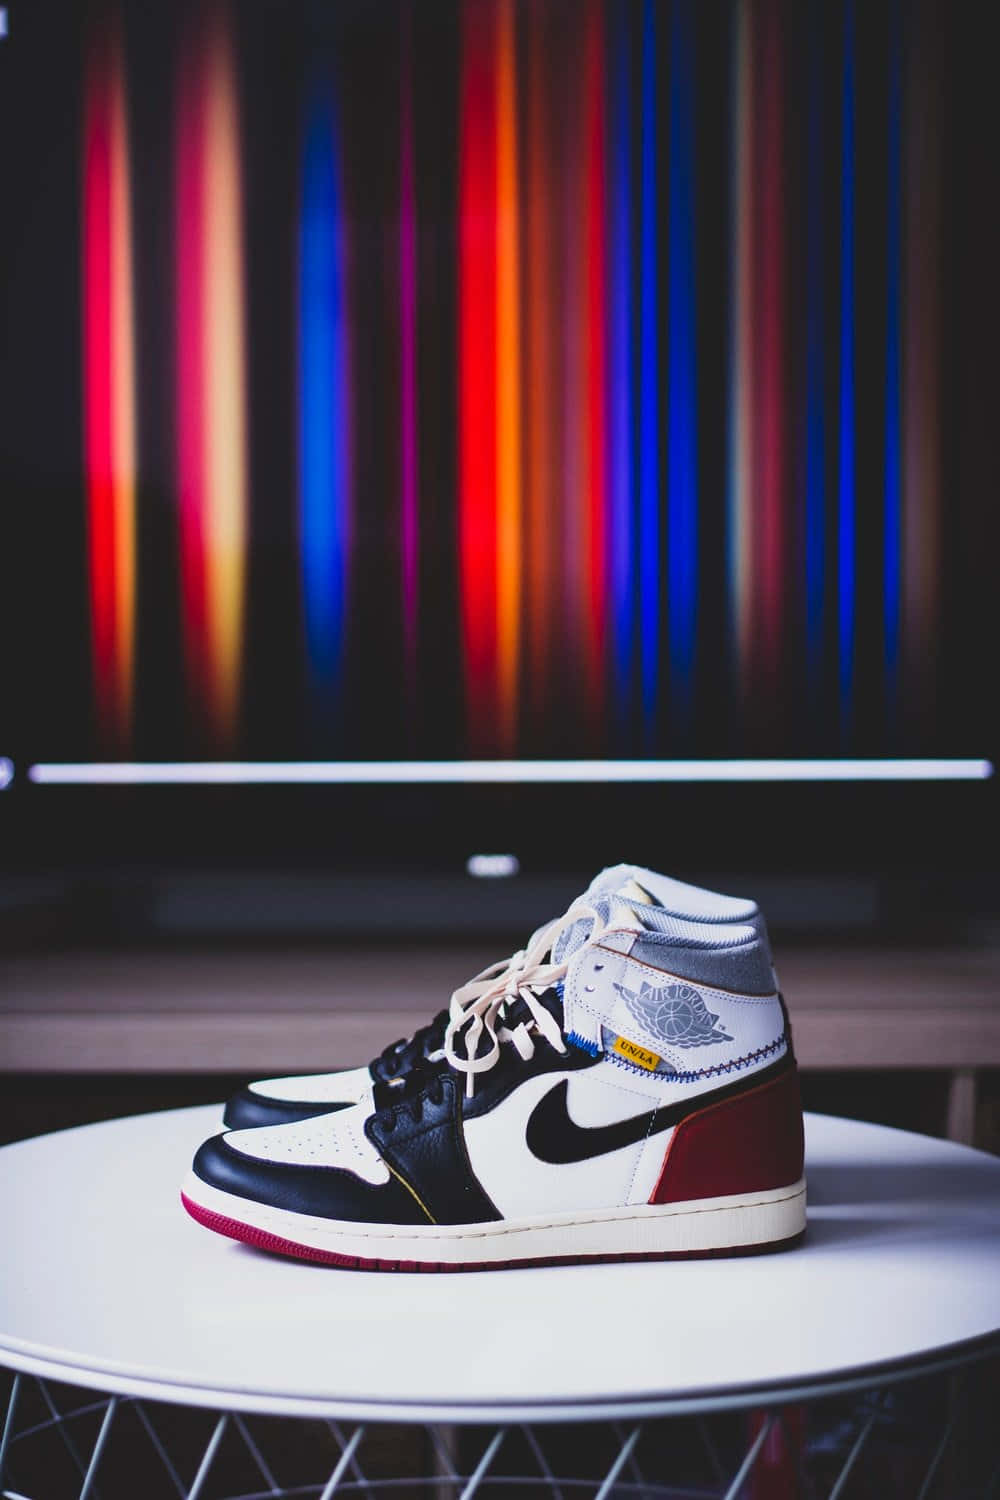 Hop højere med Nike Air Jordan! Wallpaper